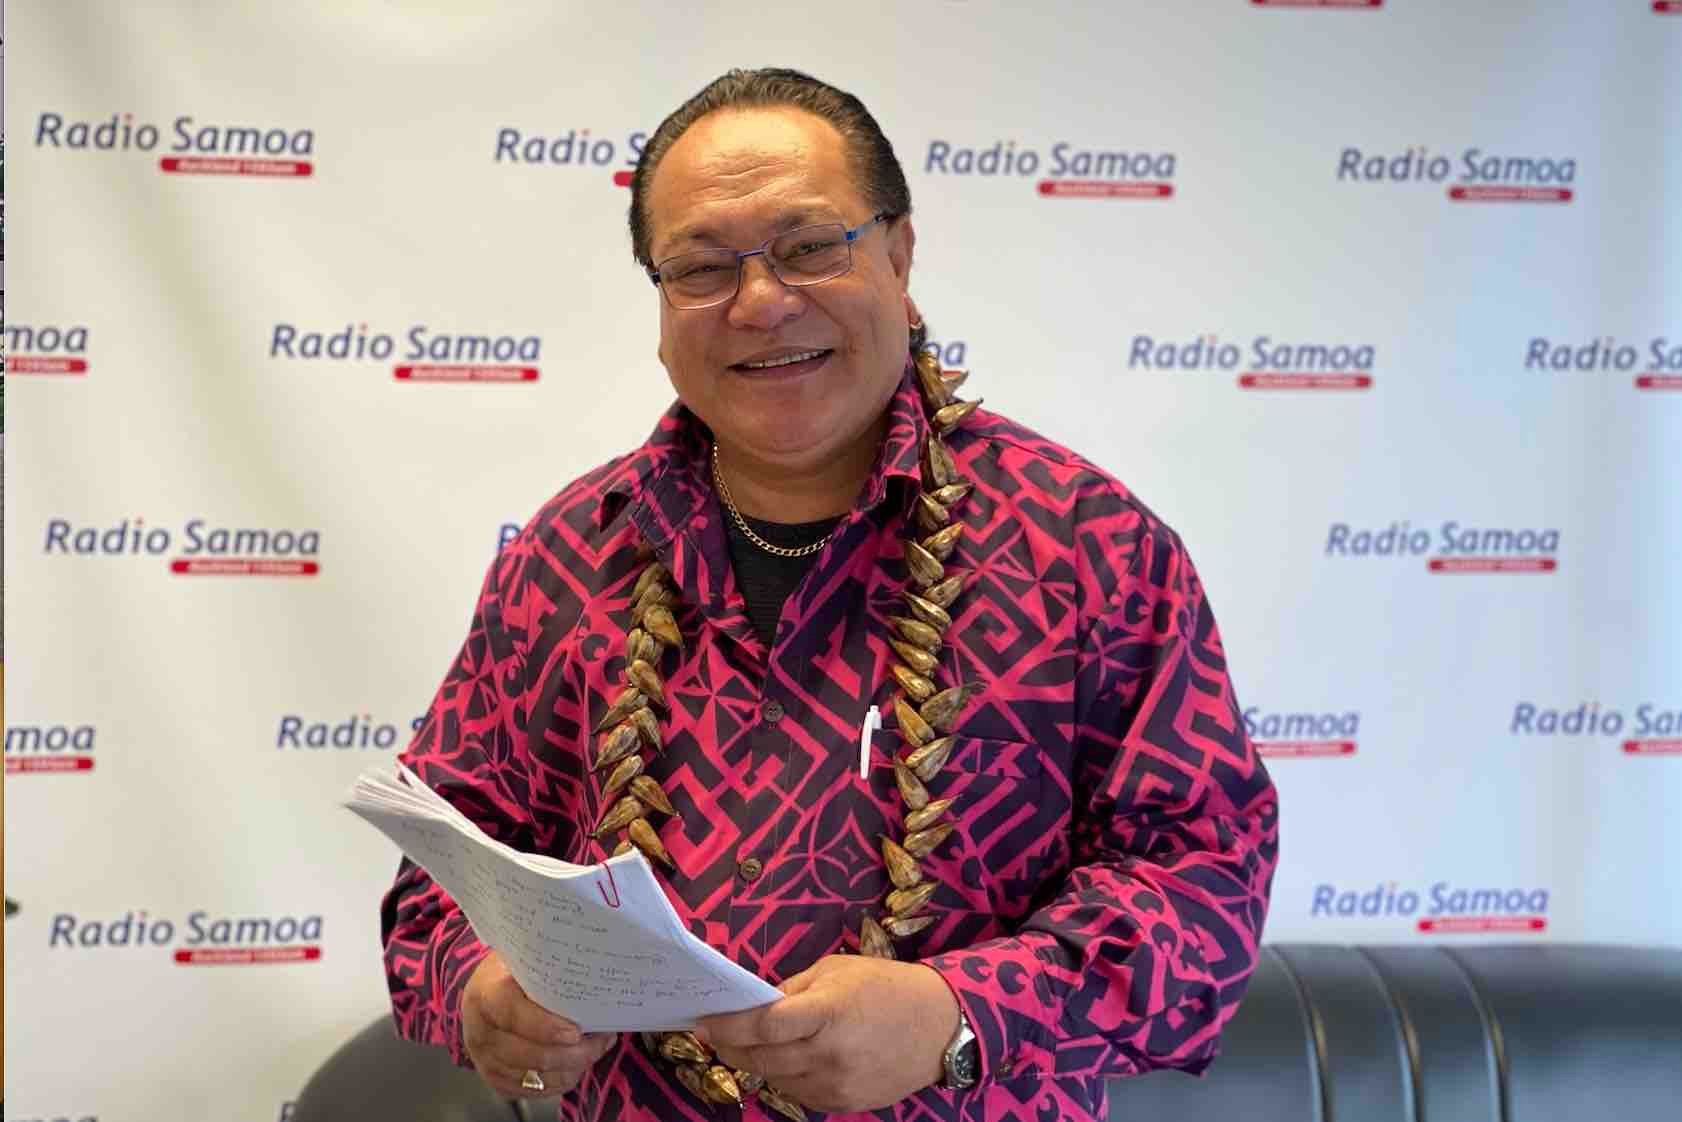 Samoa Radio Host Savea Al Harrington. Photo: John Pulu, Tagata Pasifika.